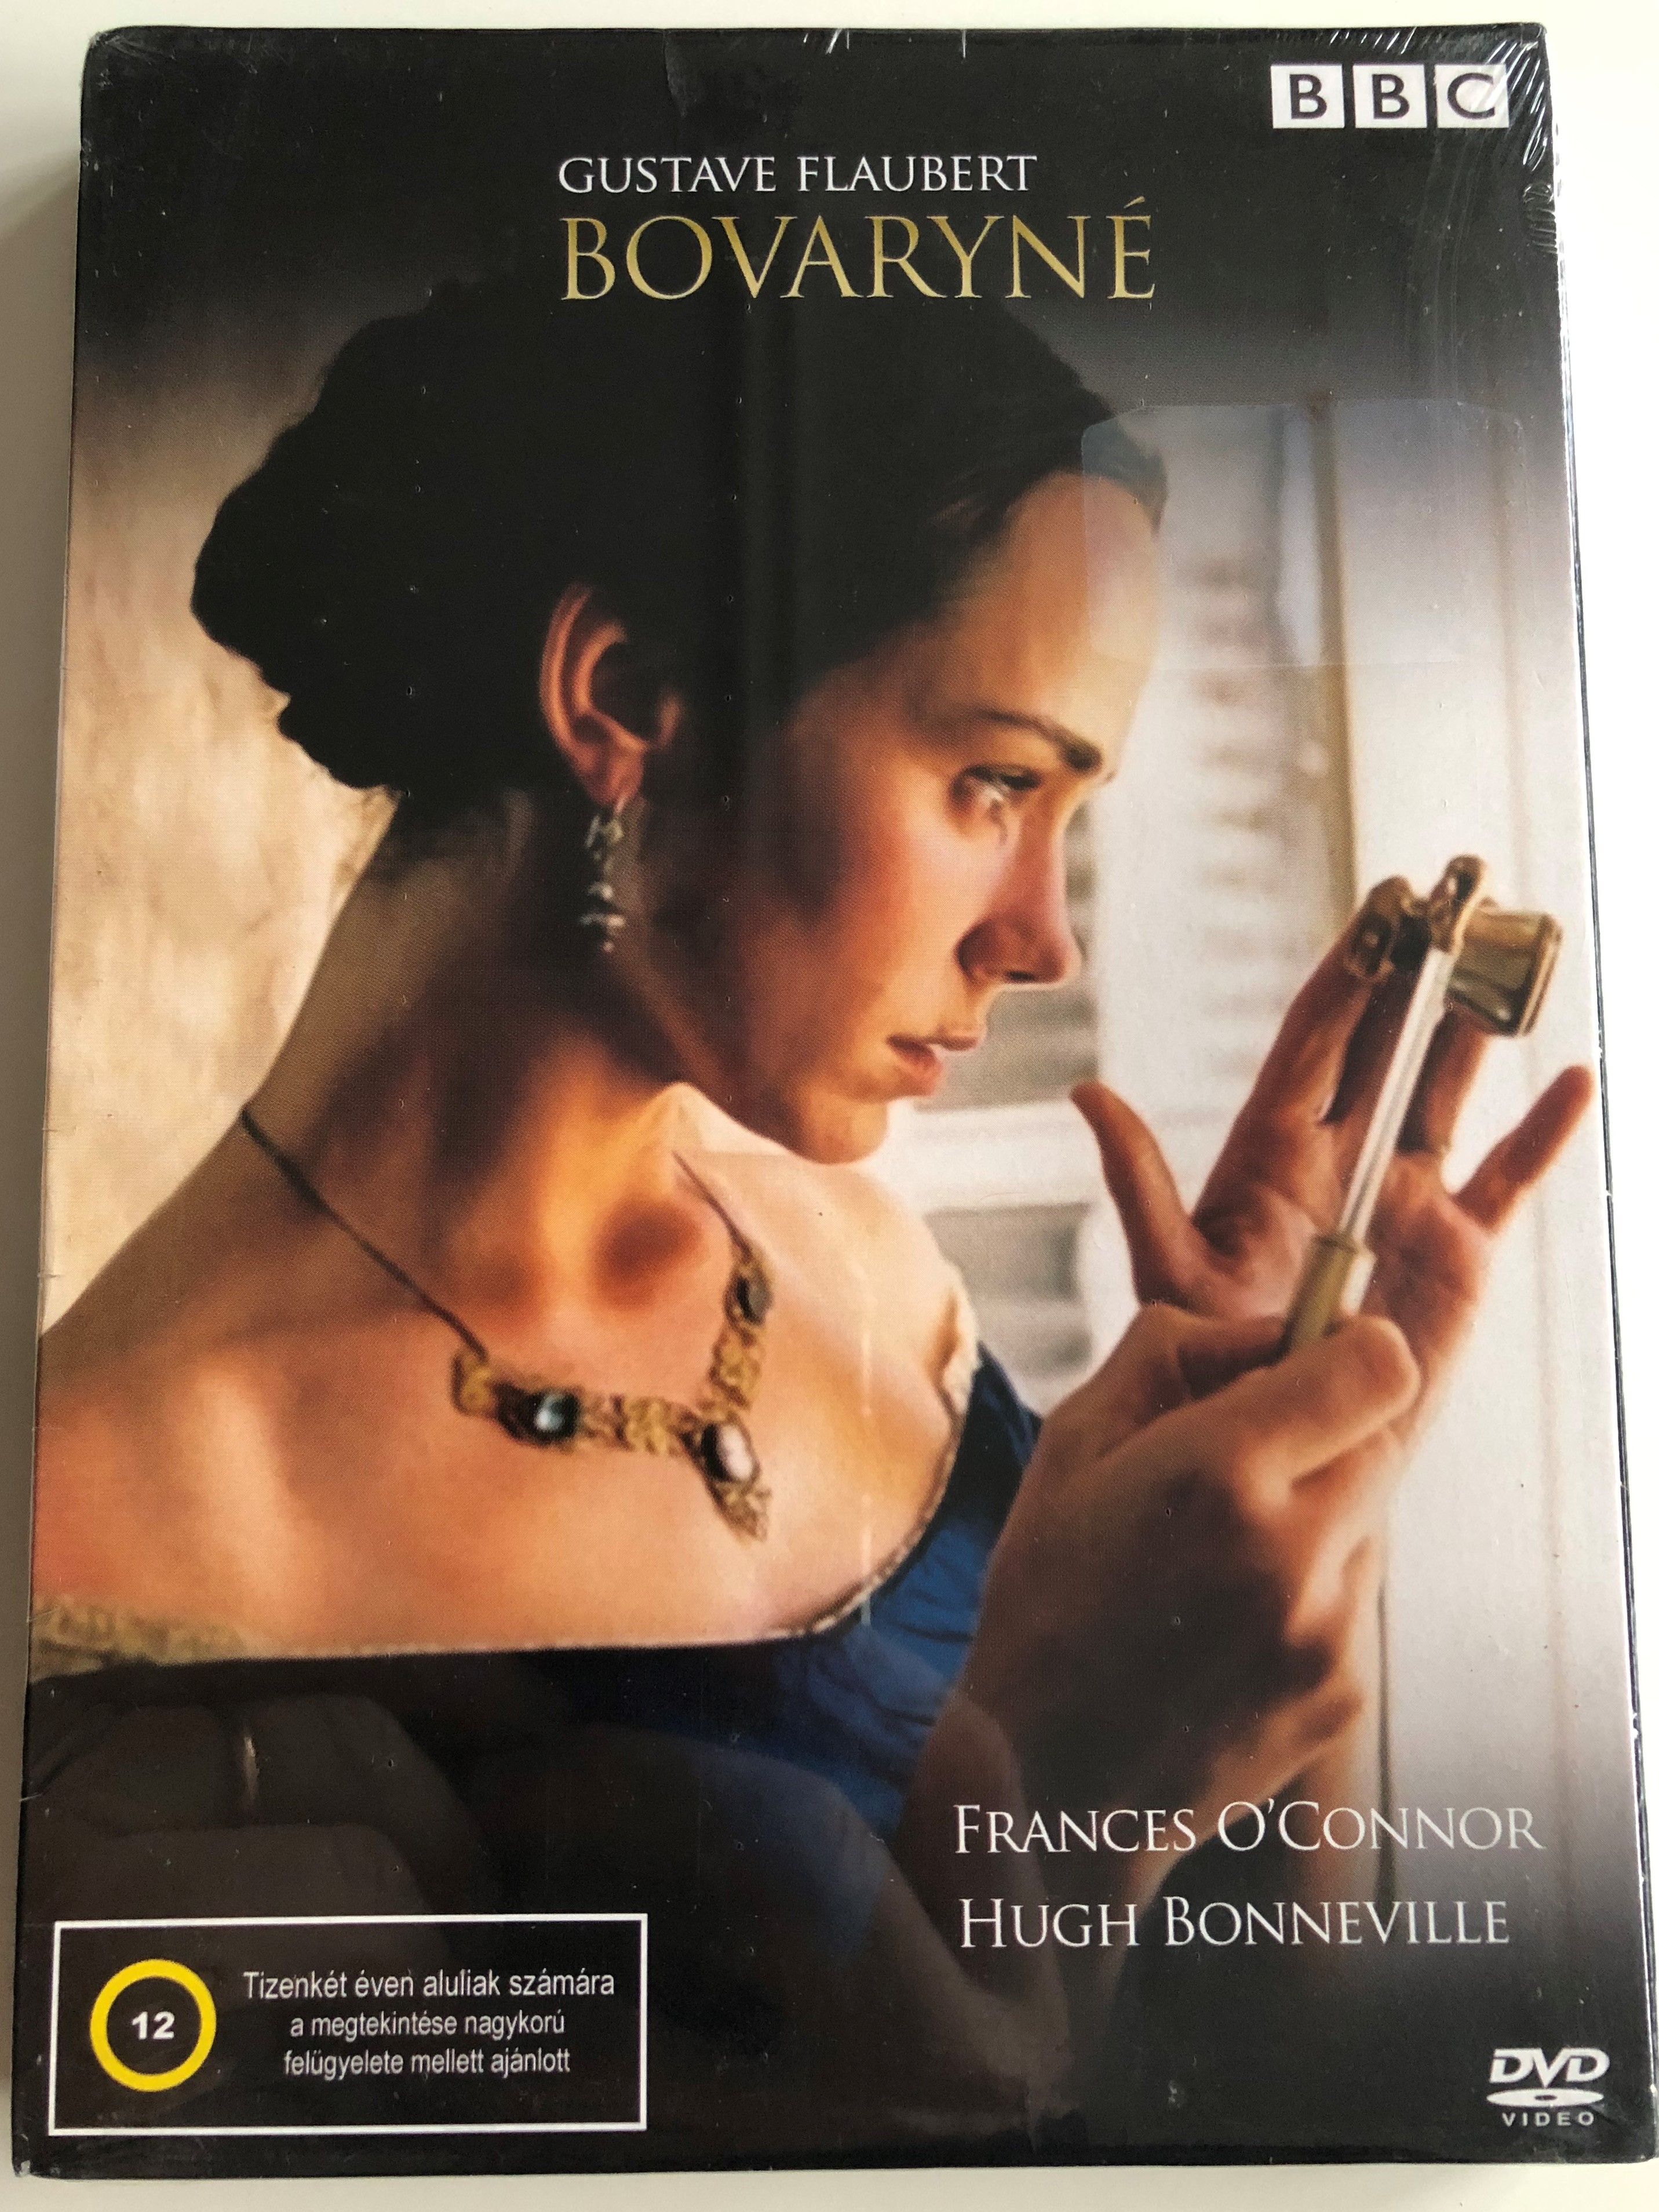 Gustave Flaubert: Madame Bovary DVD 2000 Bovaryné / BBC miniseries /  Directed by Tim Fywell / Starring: Frances O'Connor, Hugh Bonneville, Greg  Wise, Hugh Dancy - bibleinmylanguage